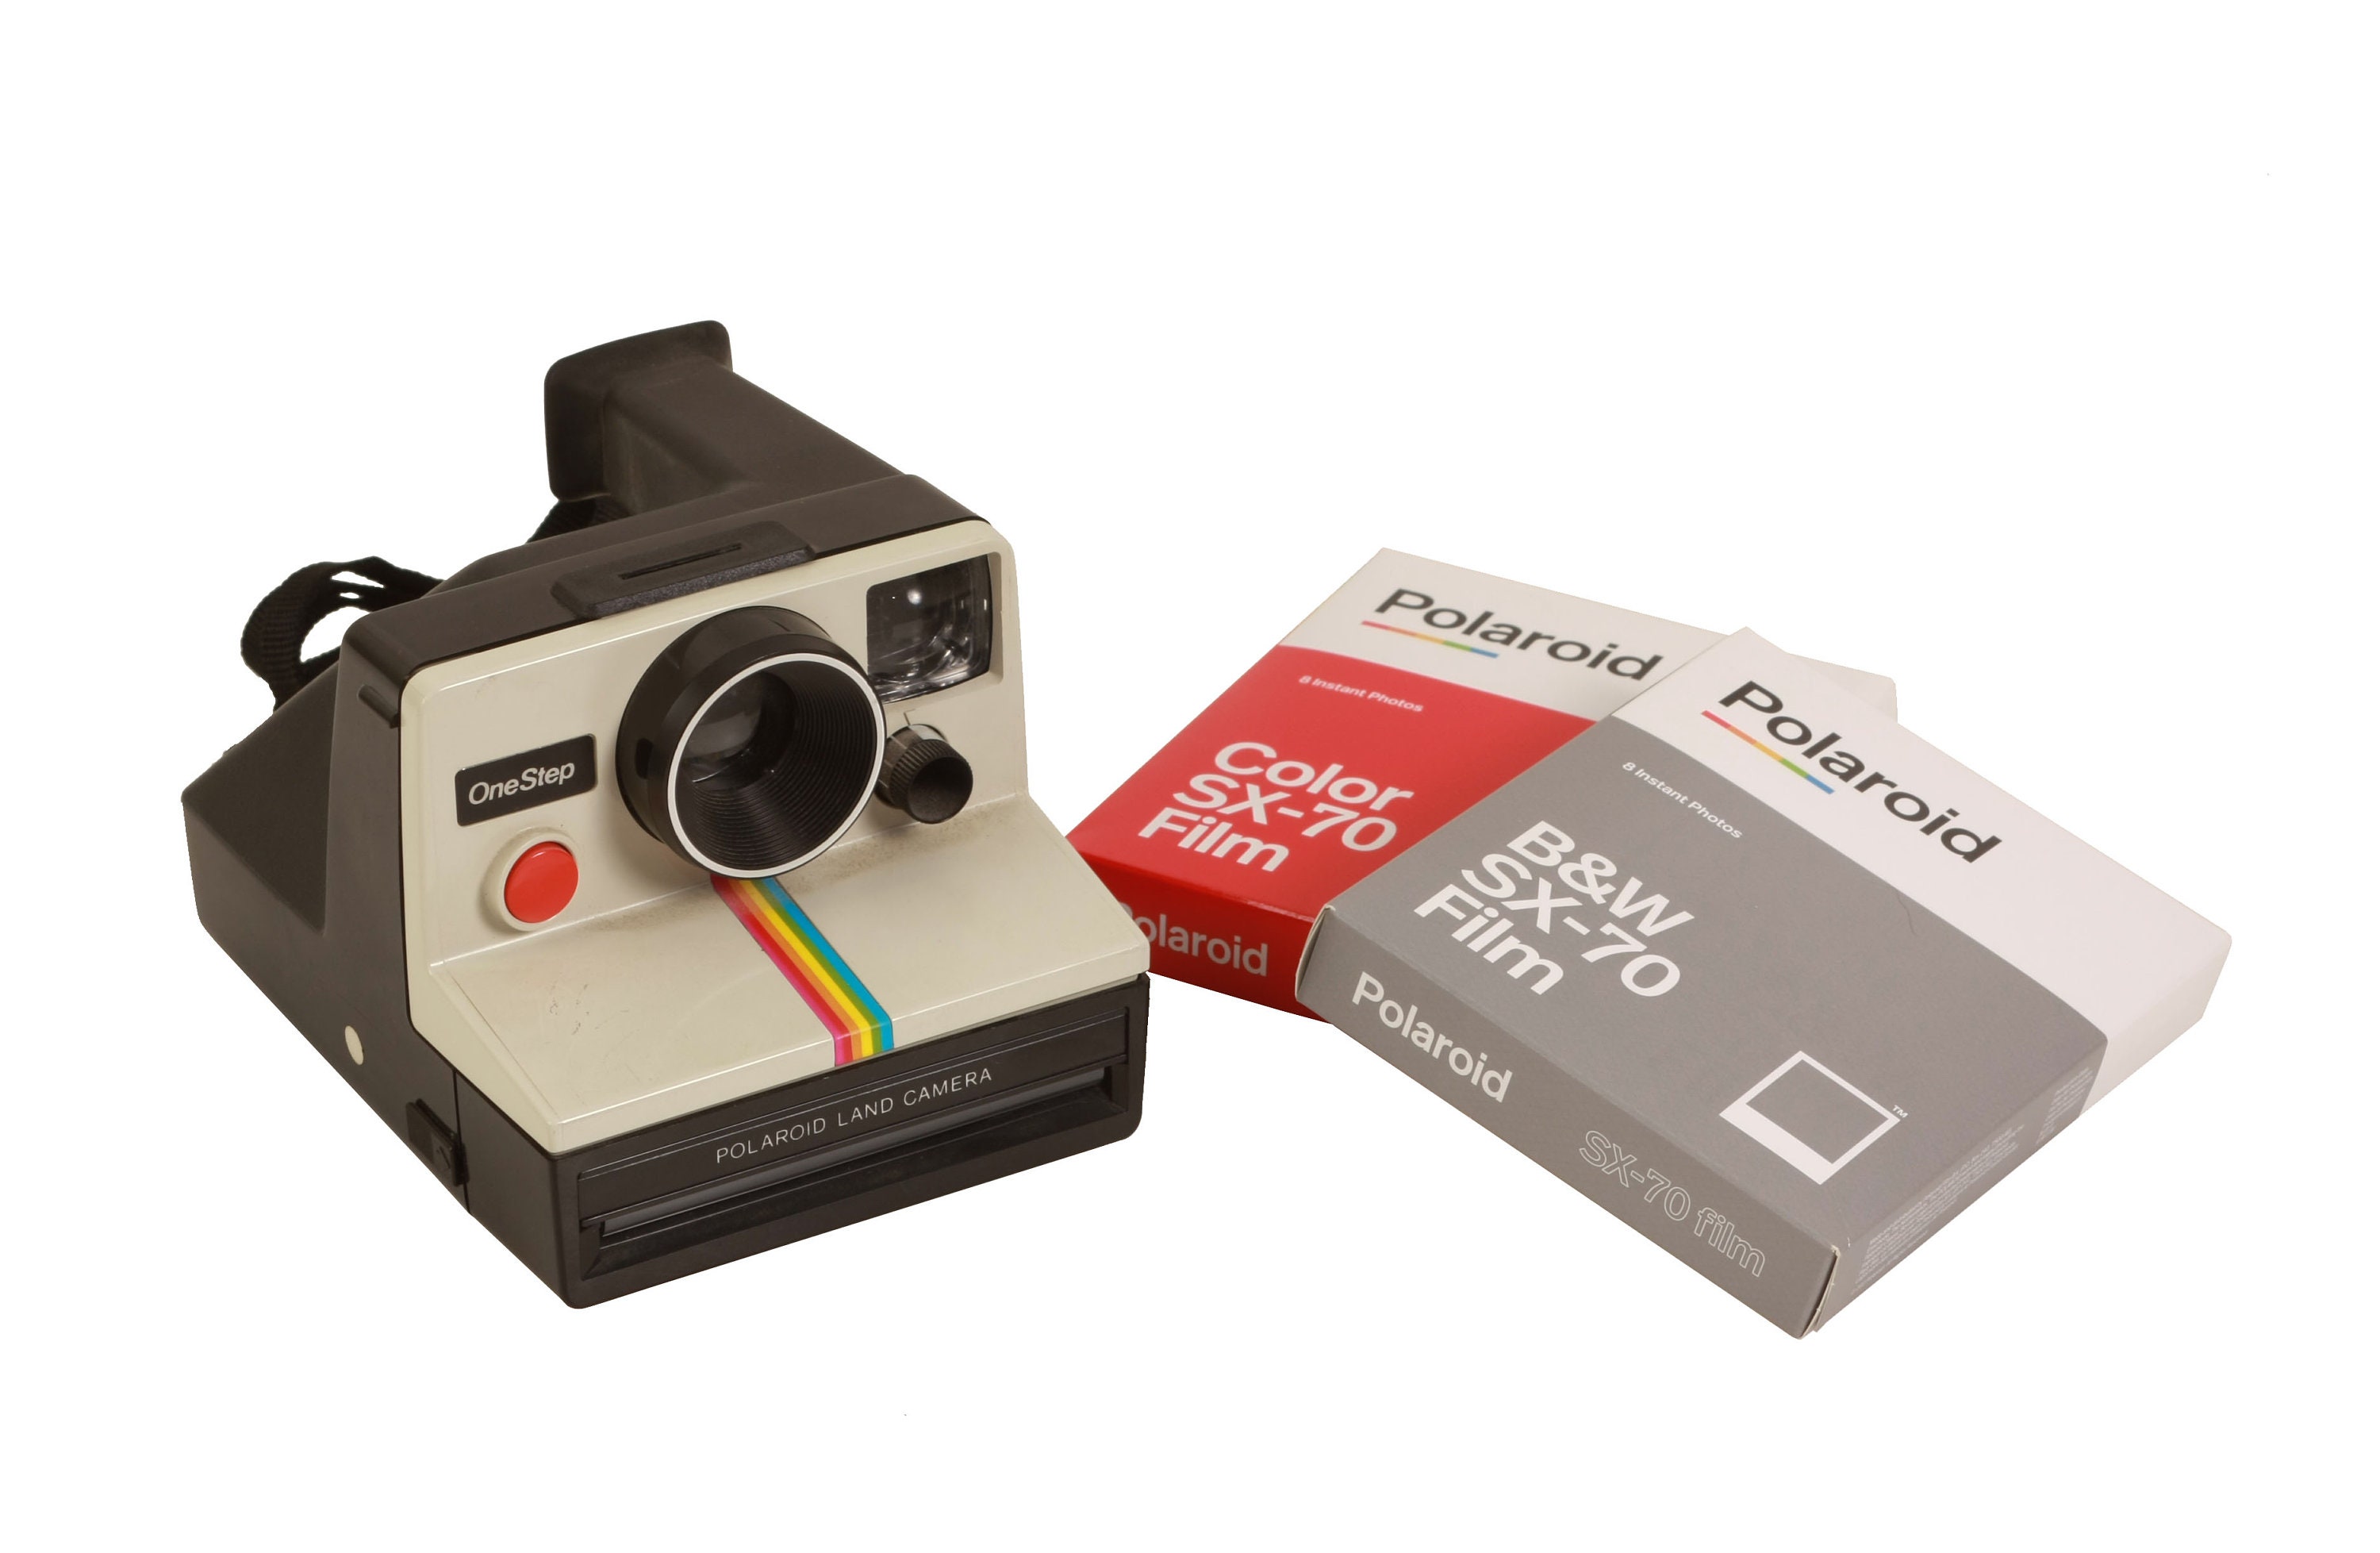 Polaroid Color SX-70 Instant Film